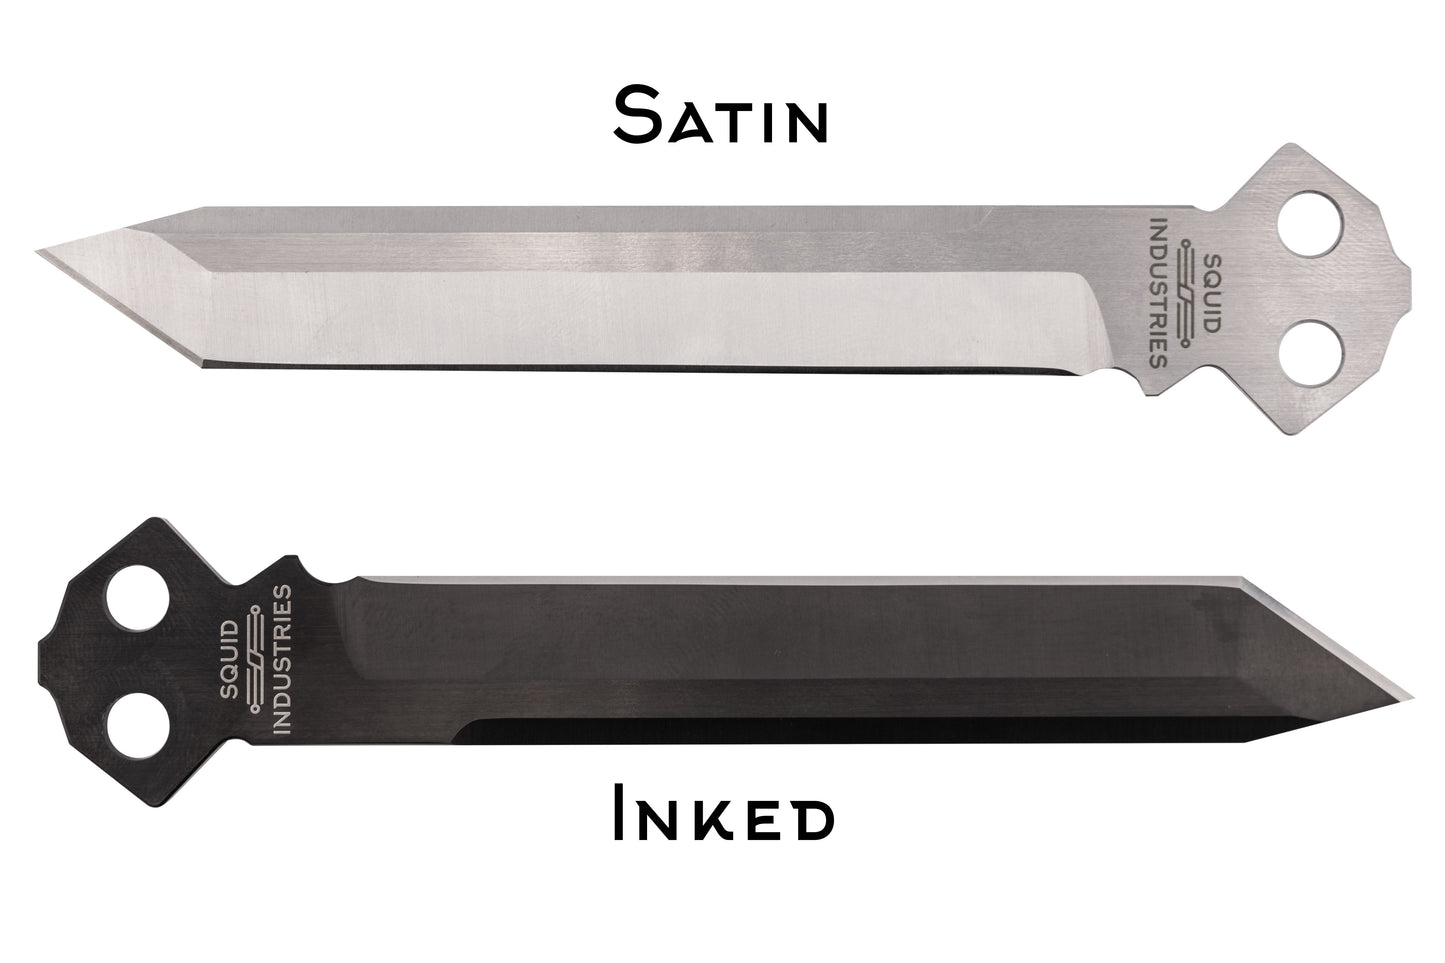 build your own krake raken live blade balisong blade type tanto in silver or black